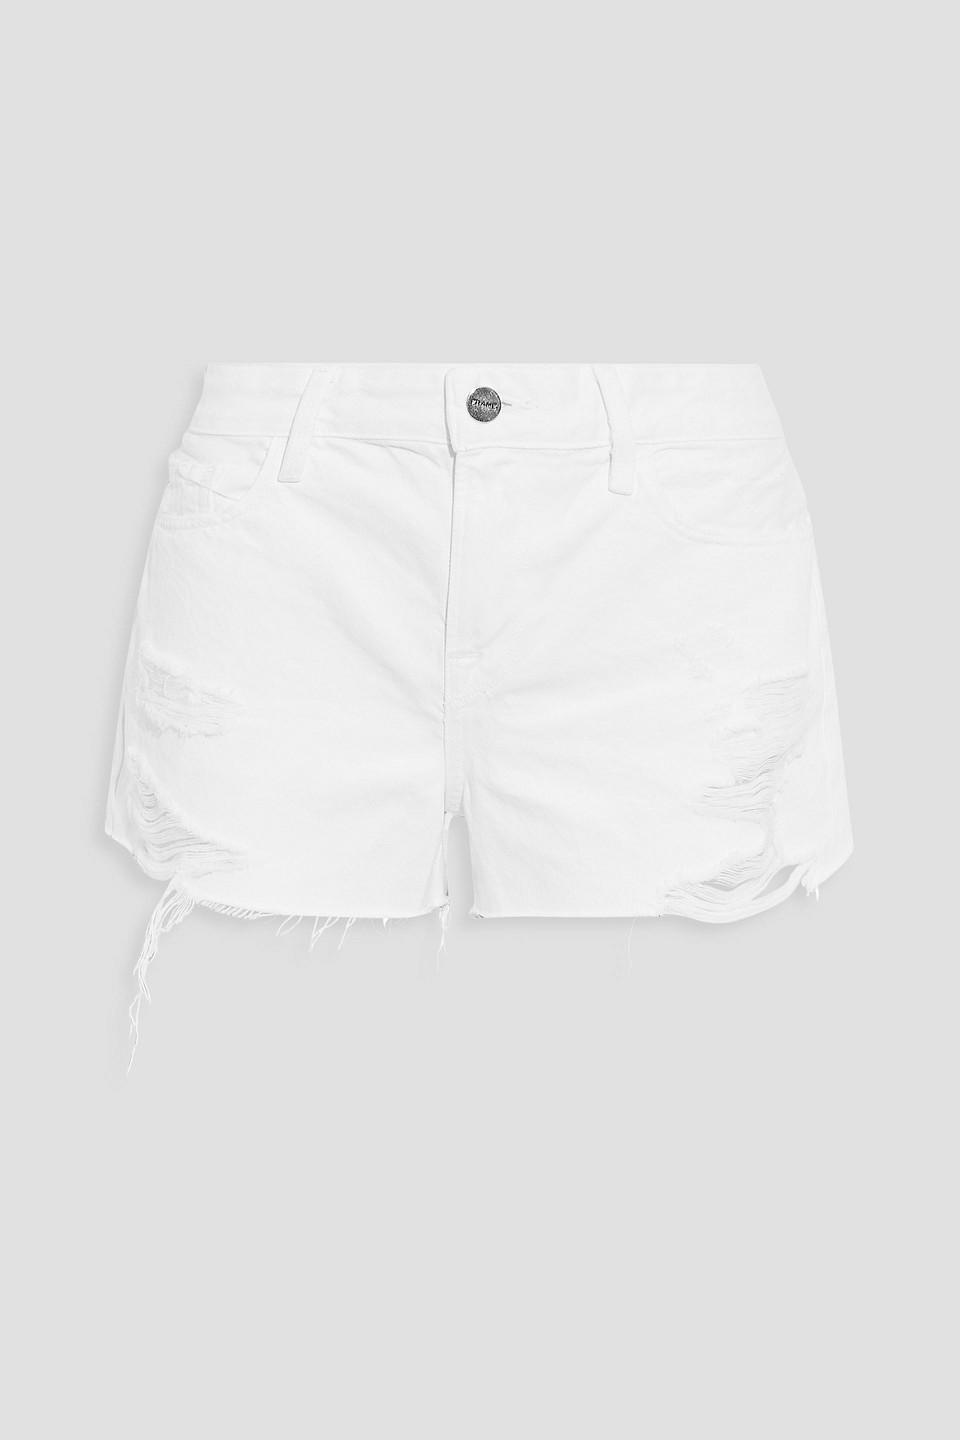 FRAME Le Grand Garçon Distressed Denim Shorts in White | Lyst